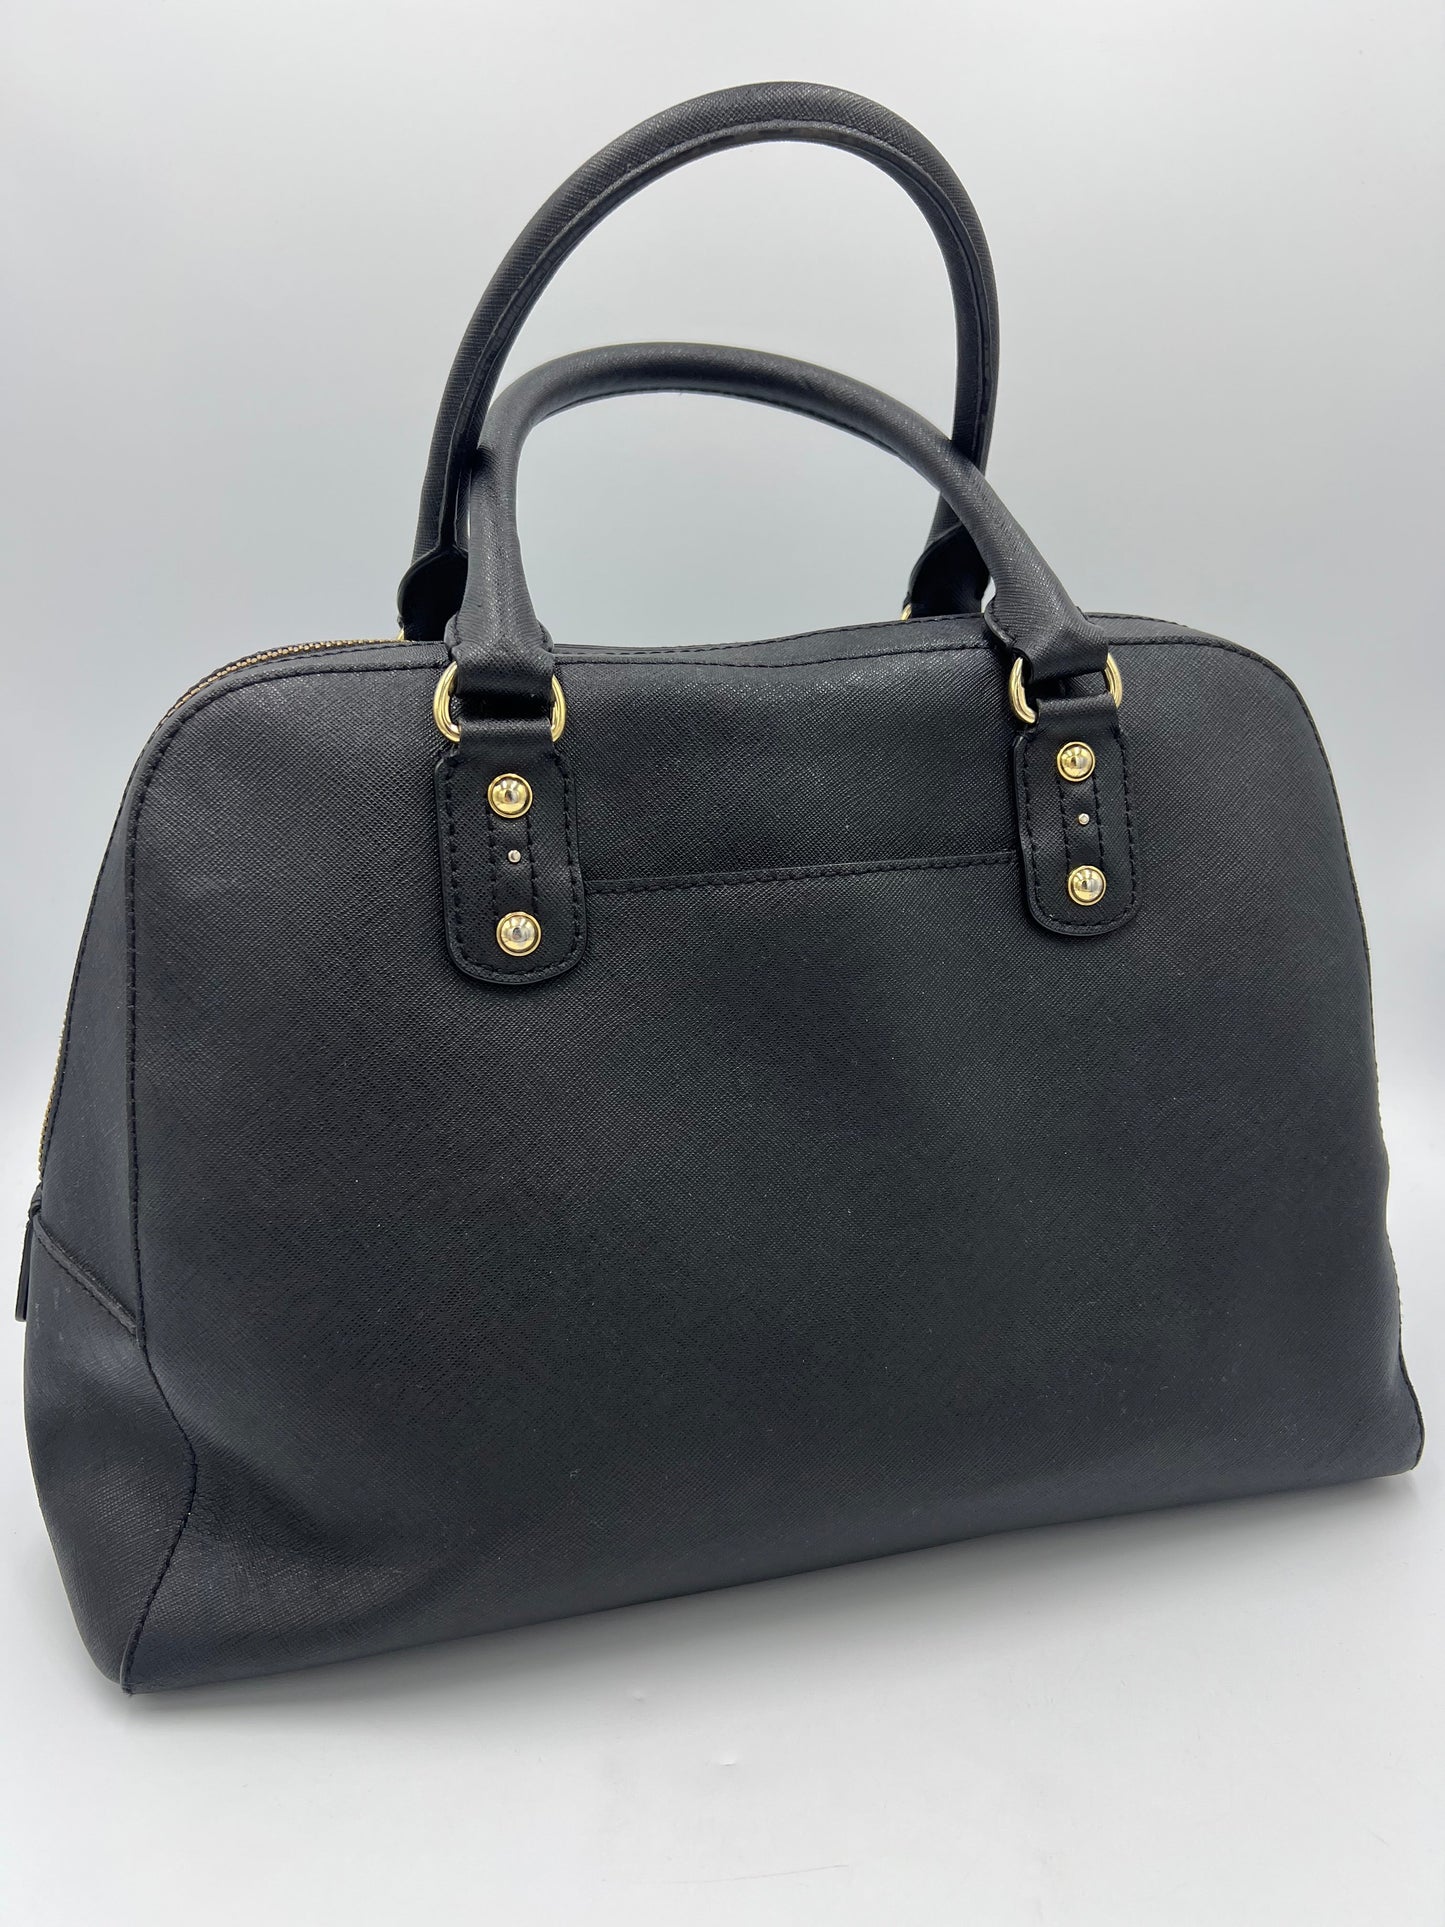 Black Handbag Designer Michael Kors